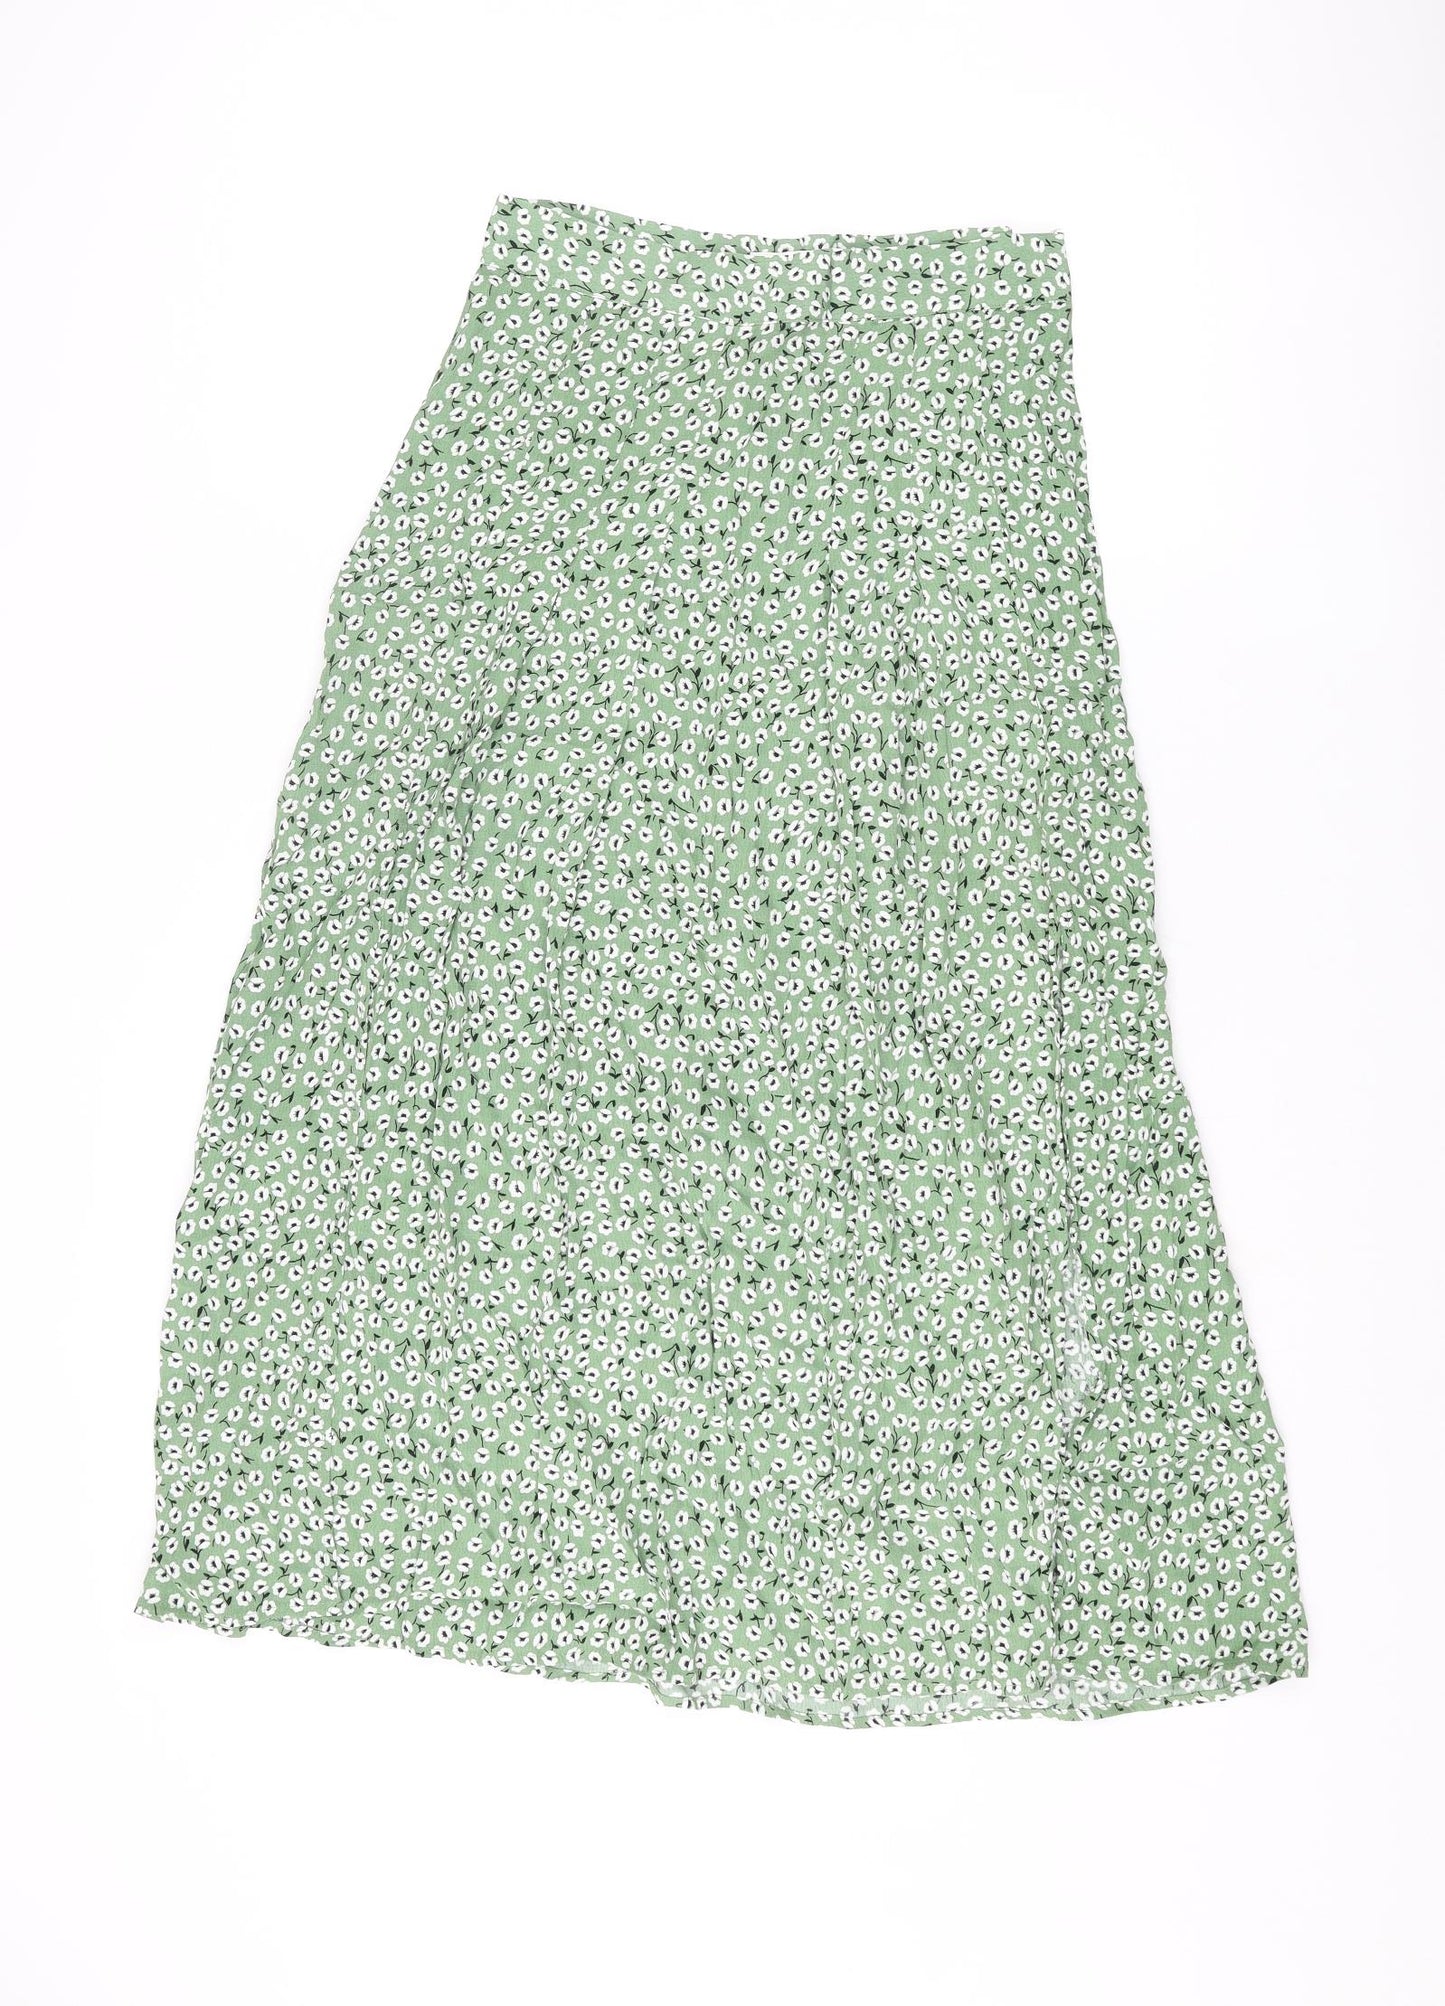 H&M Womens Green Floral Viscose A-Line Skirt Size 10 Zip